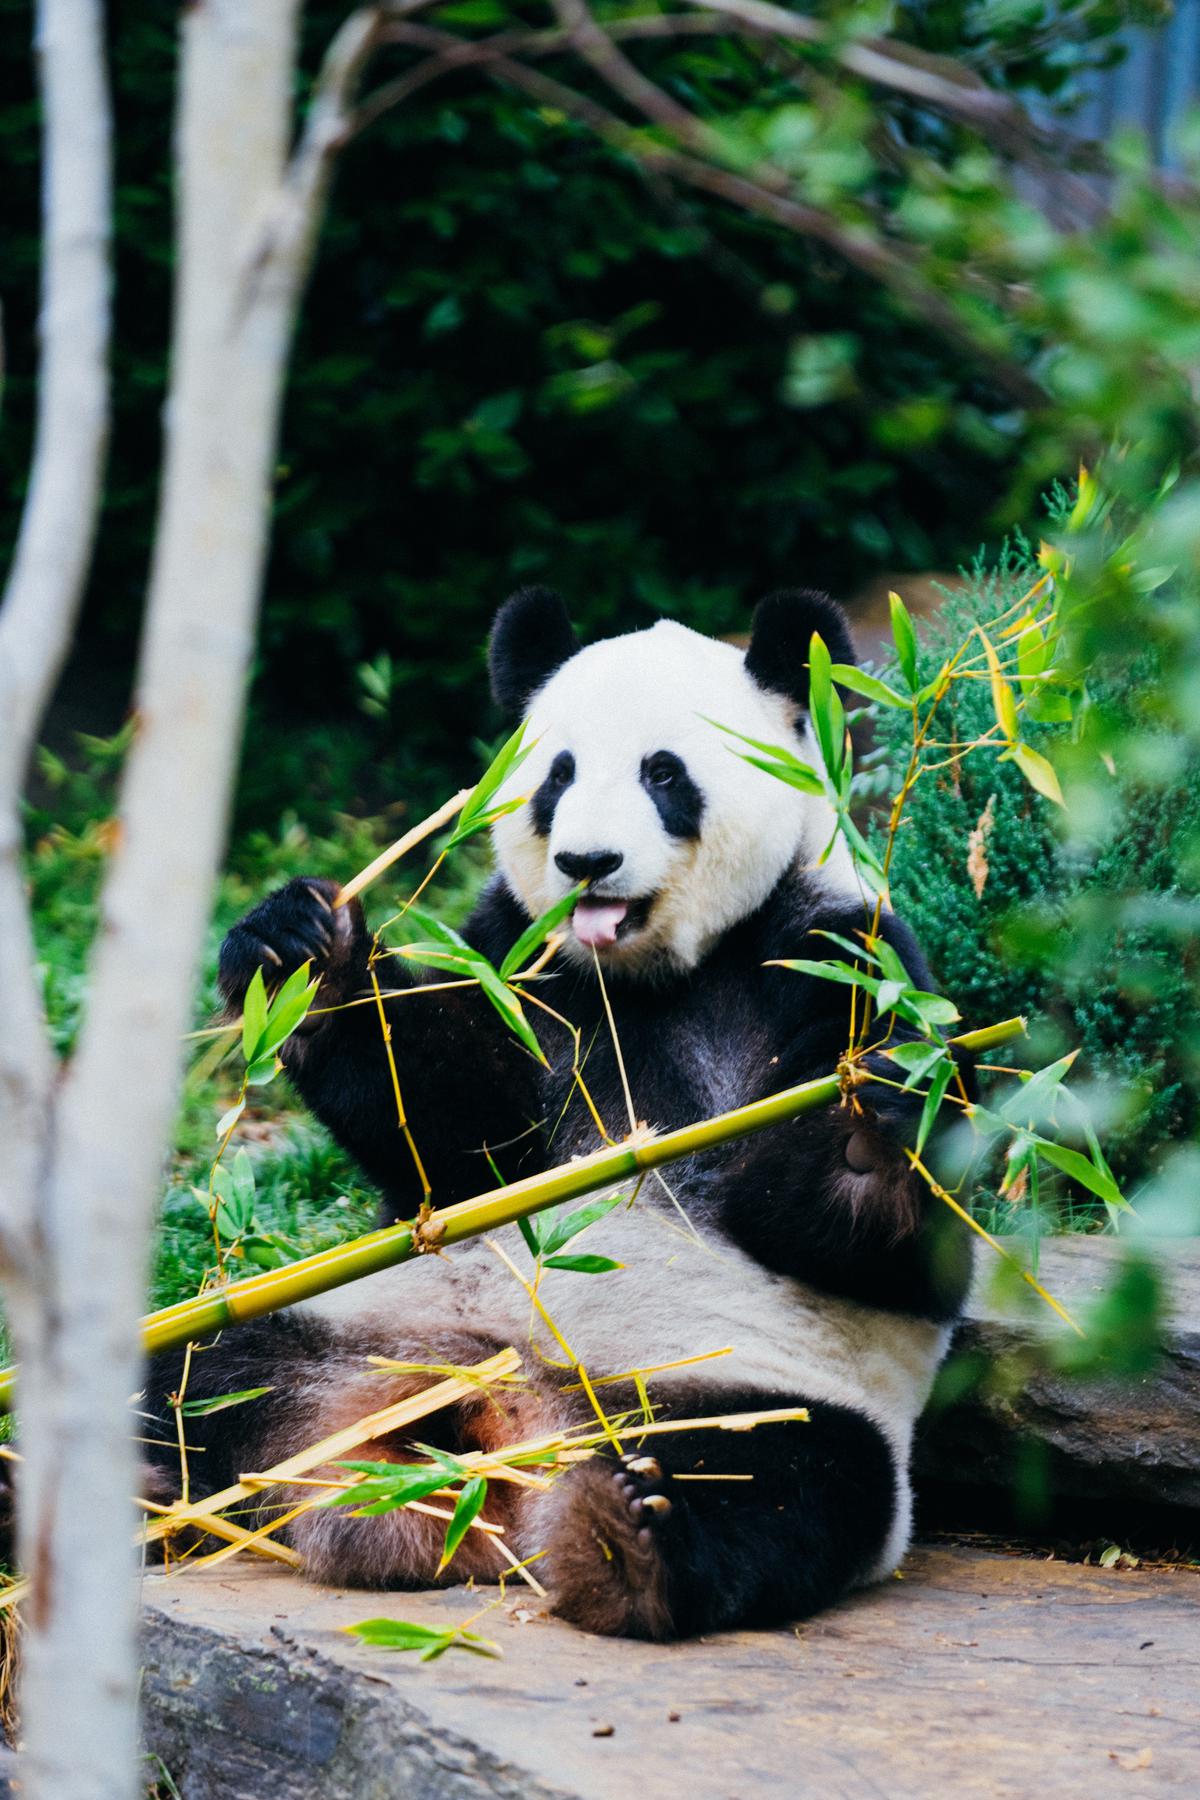 Image of a panda eating bamboo leaves